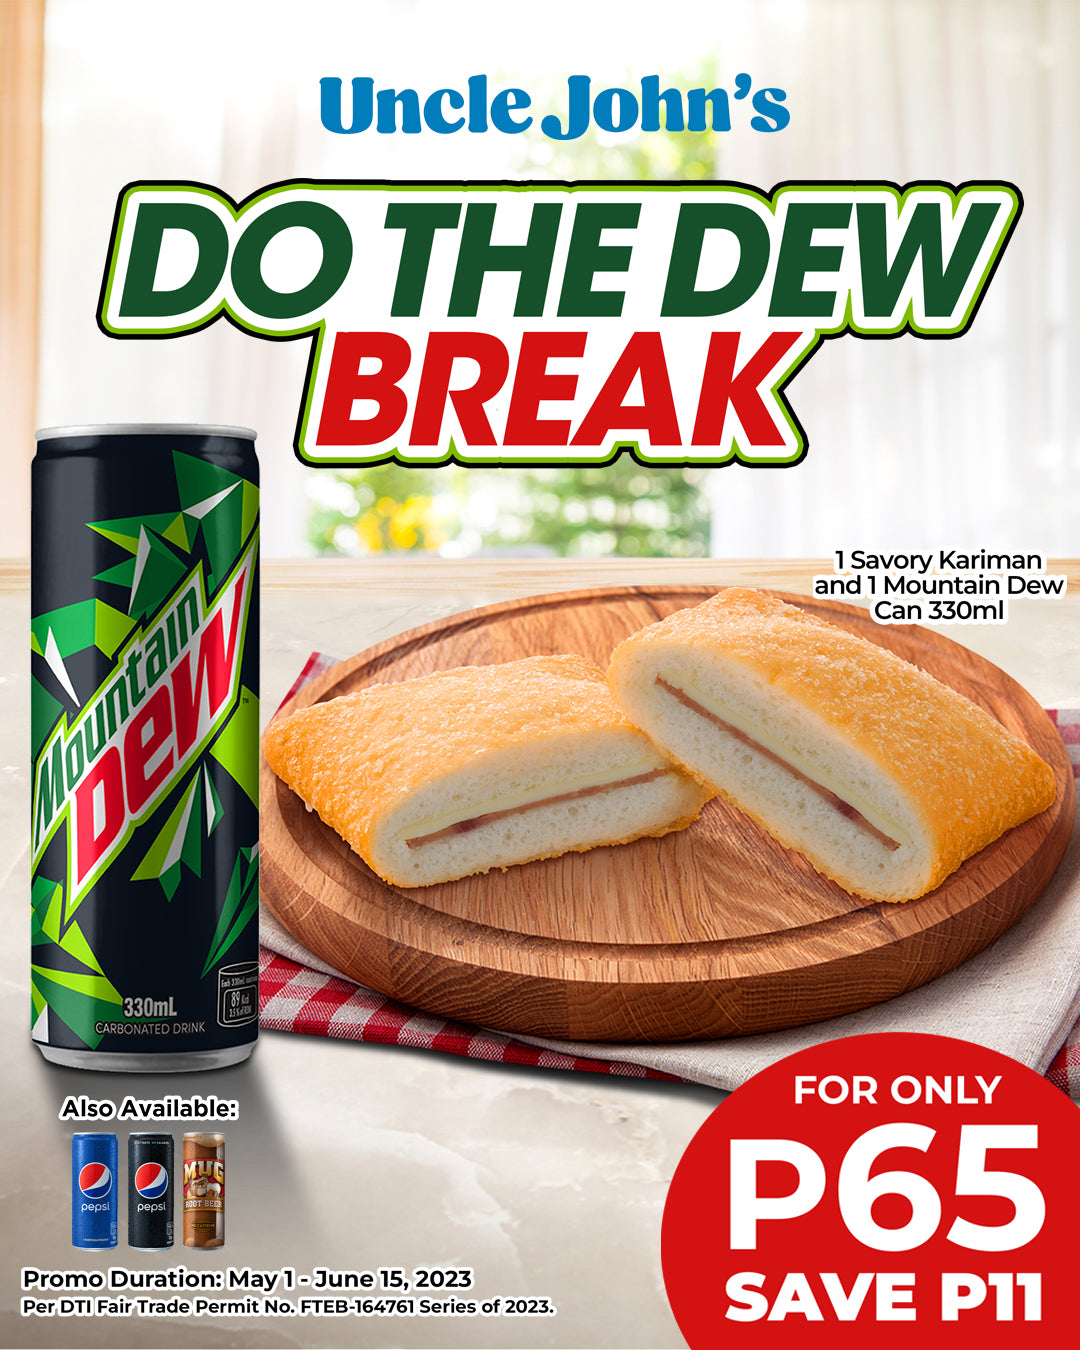 Do the dew break